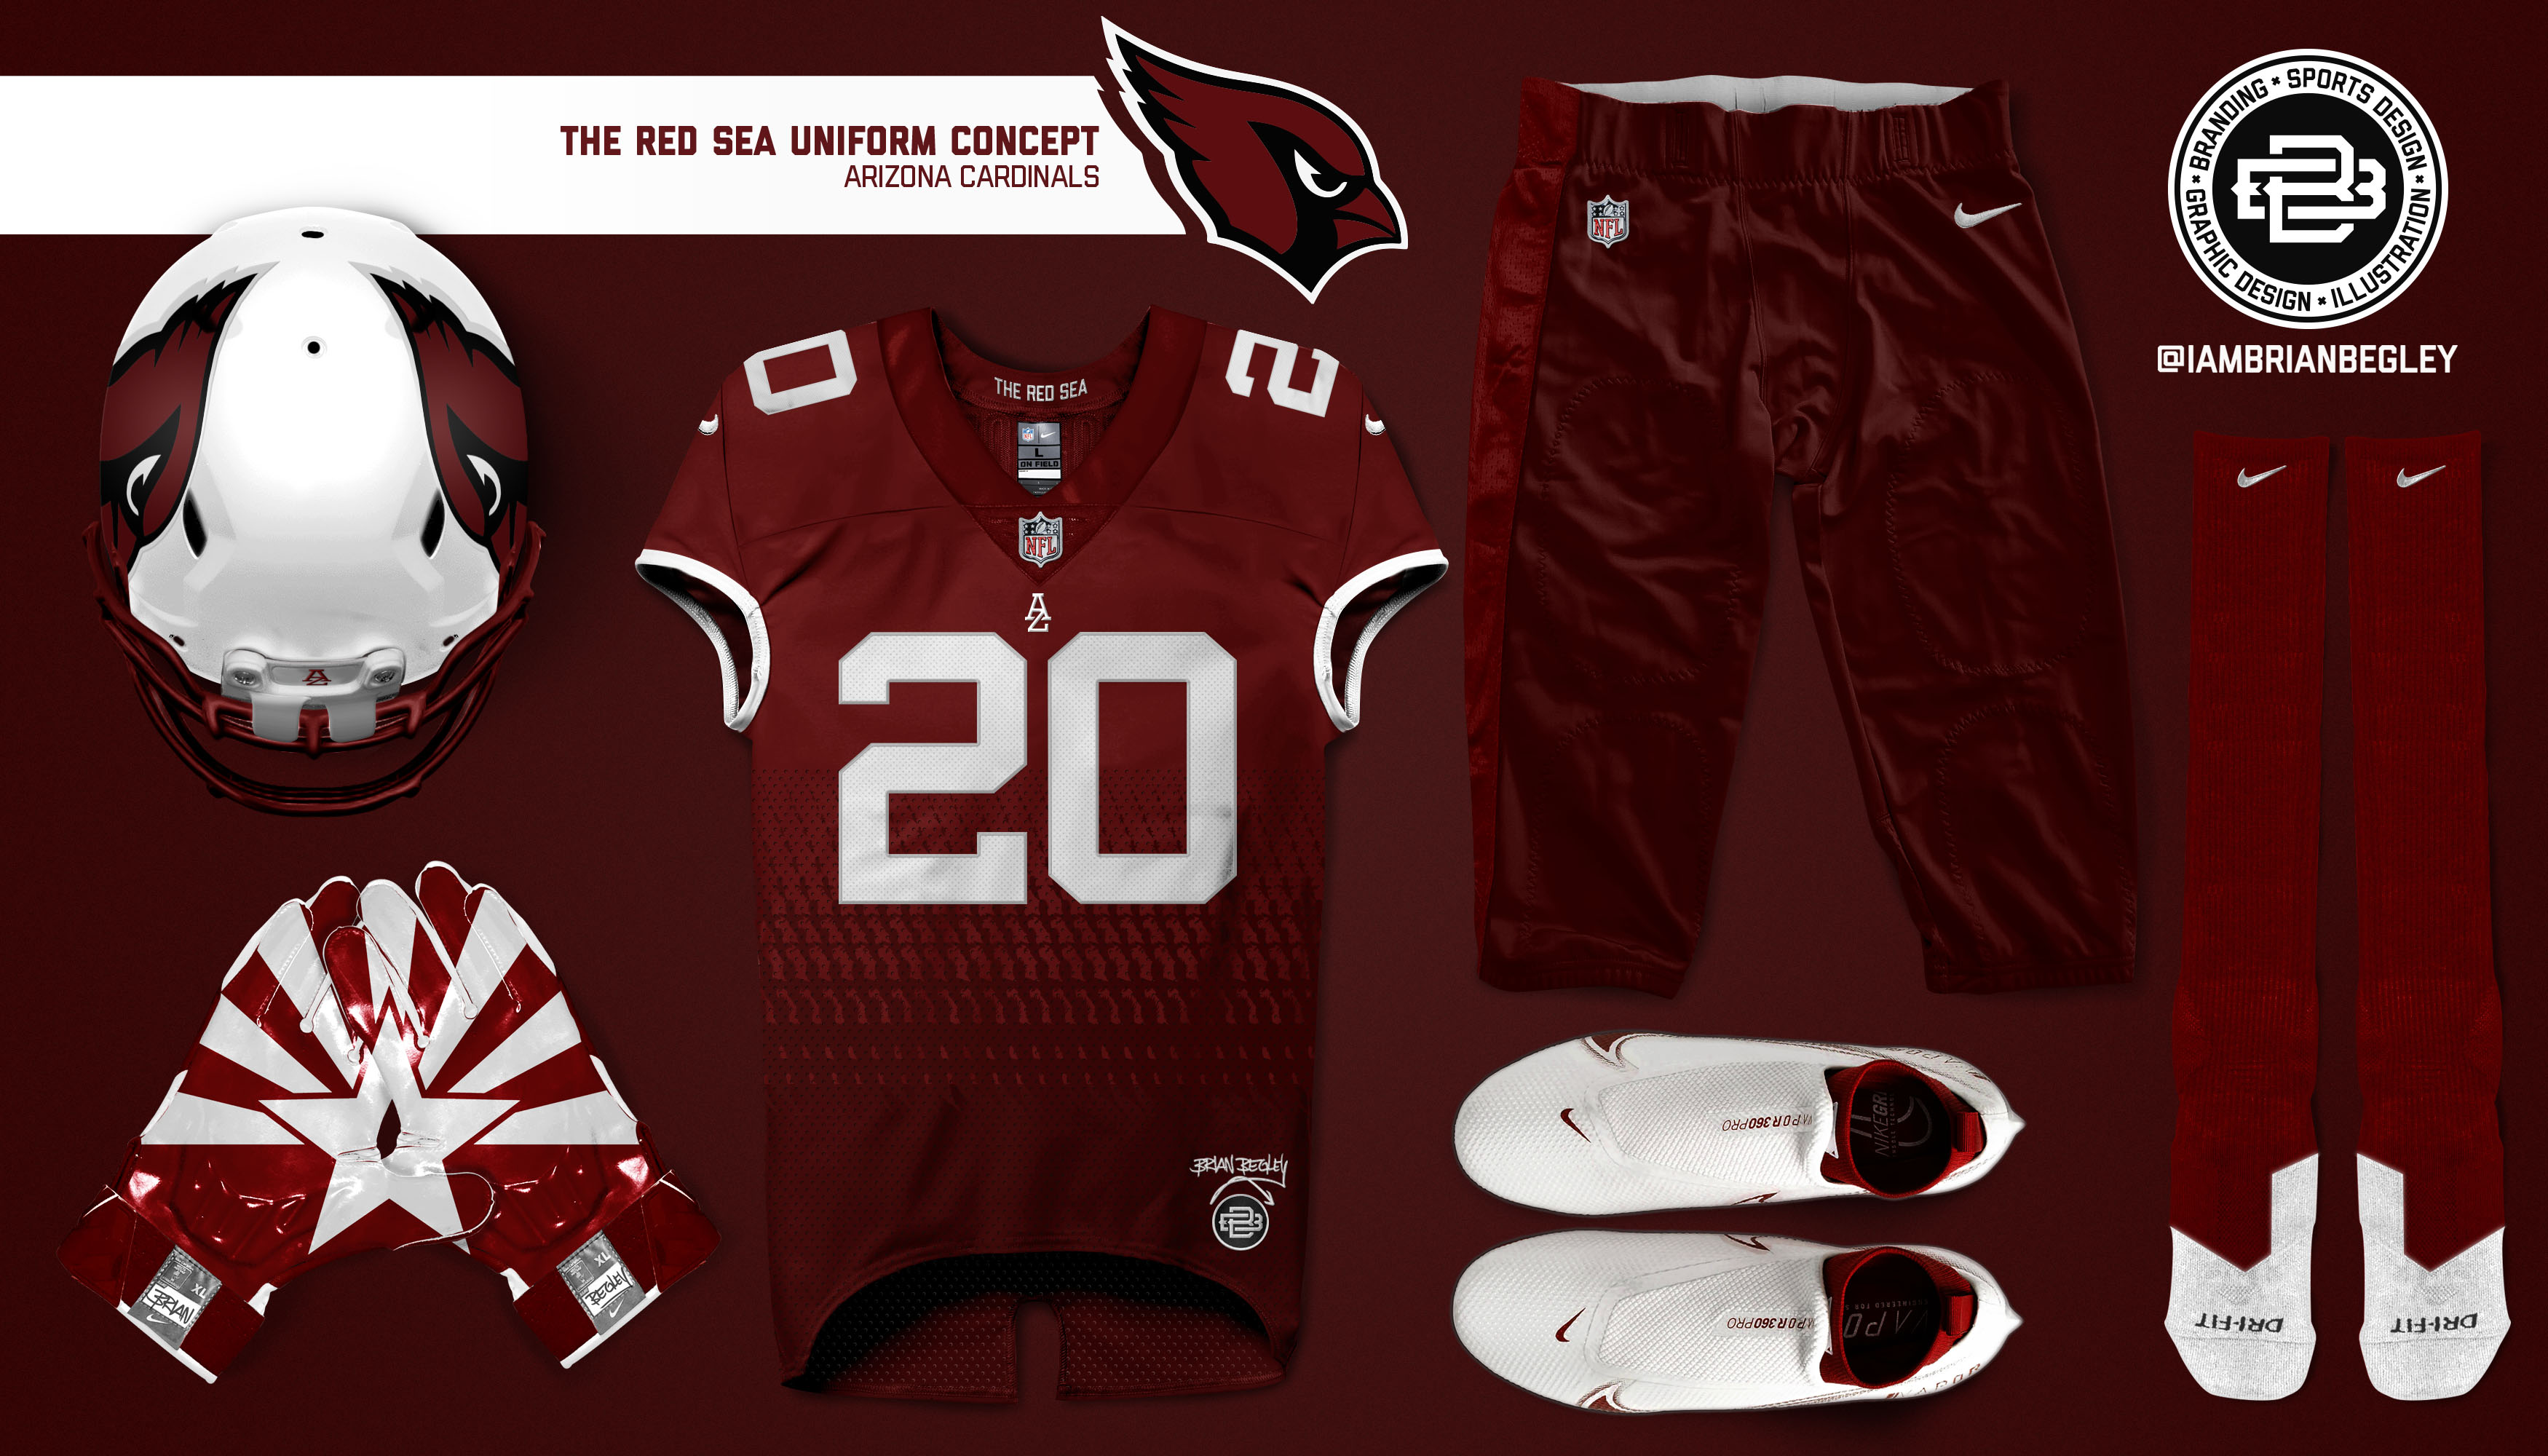 Brian Begley on X: Check out my @nba @nike uniform design